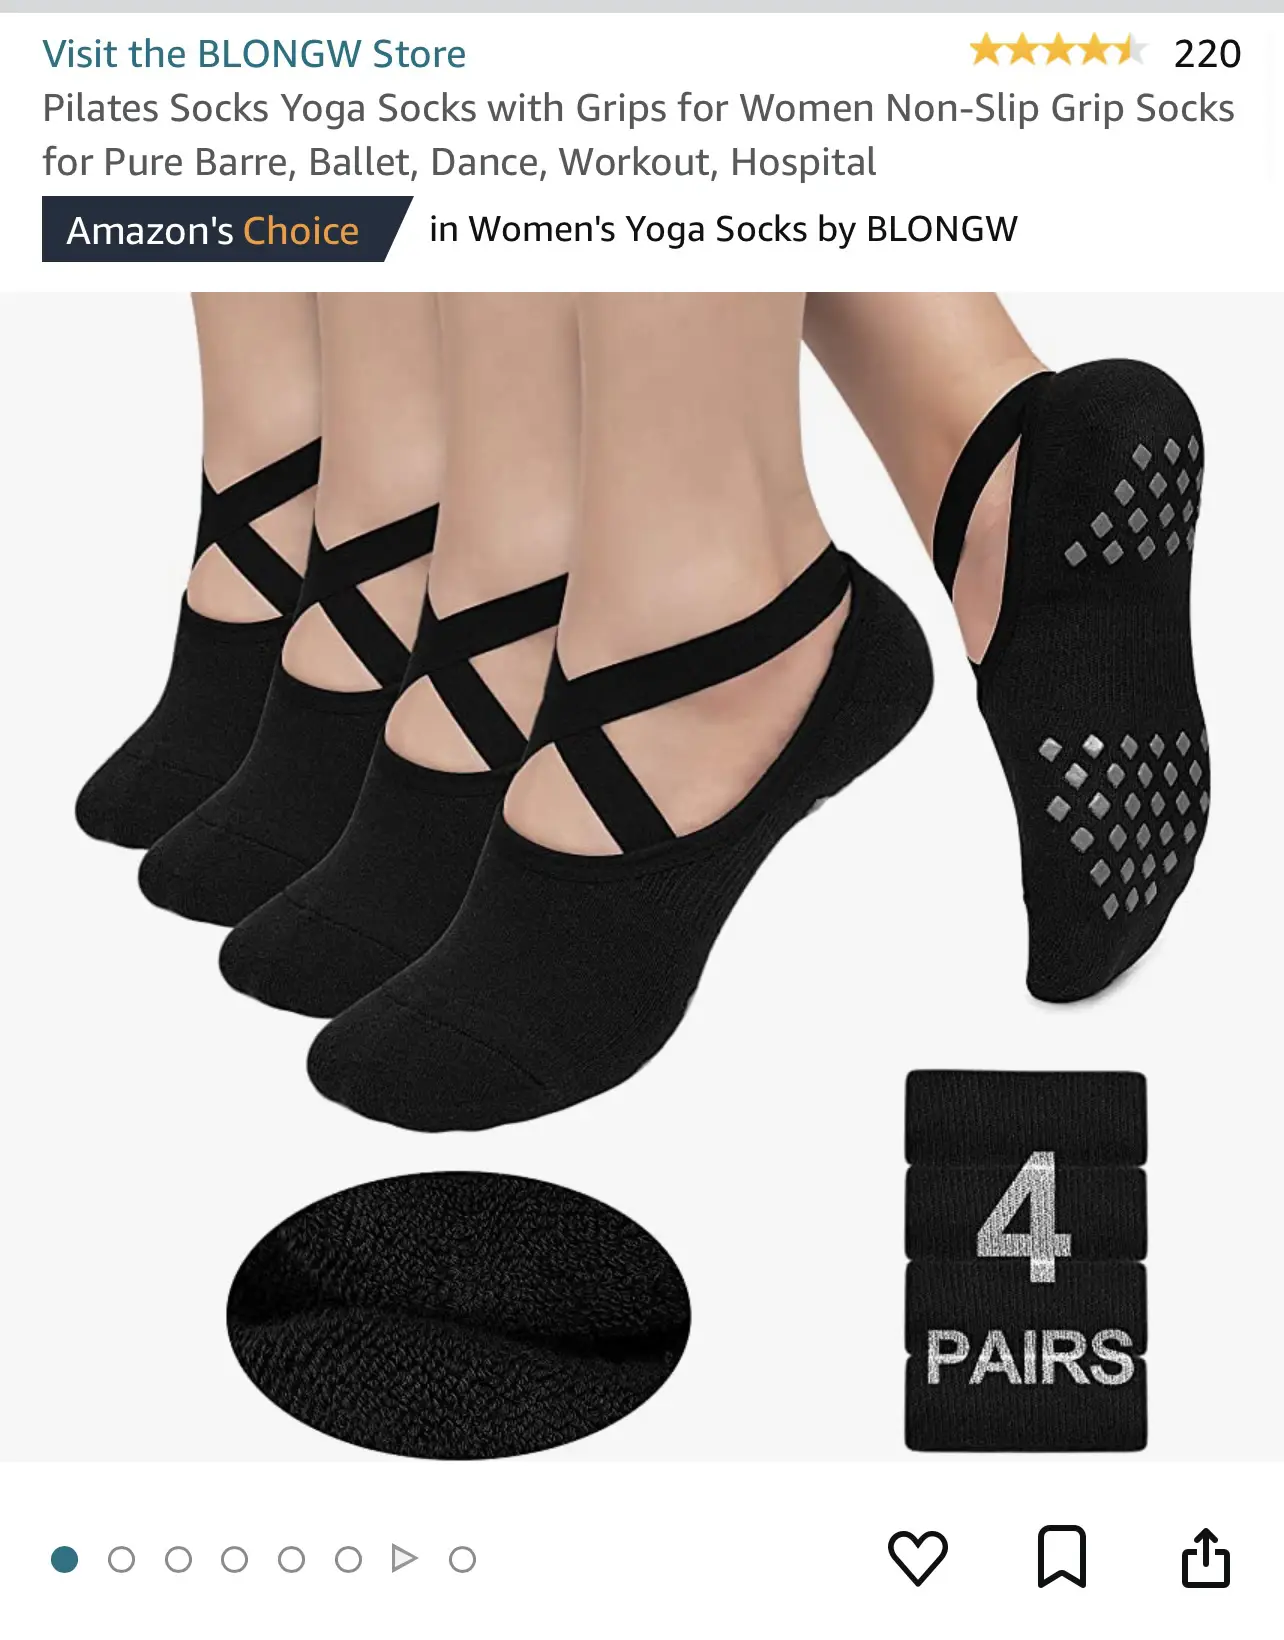 1 Pc Grip Socks Yoga Socks with Grips for Women Non Slip, Pilates, Workout, Pure  Barre, Ballet, Dance, Hospital Socks(Pink)